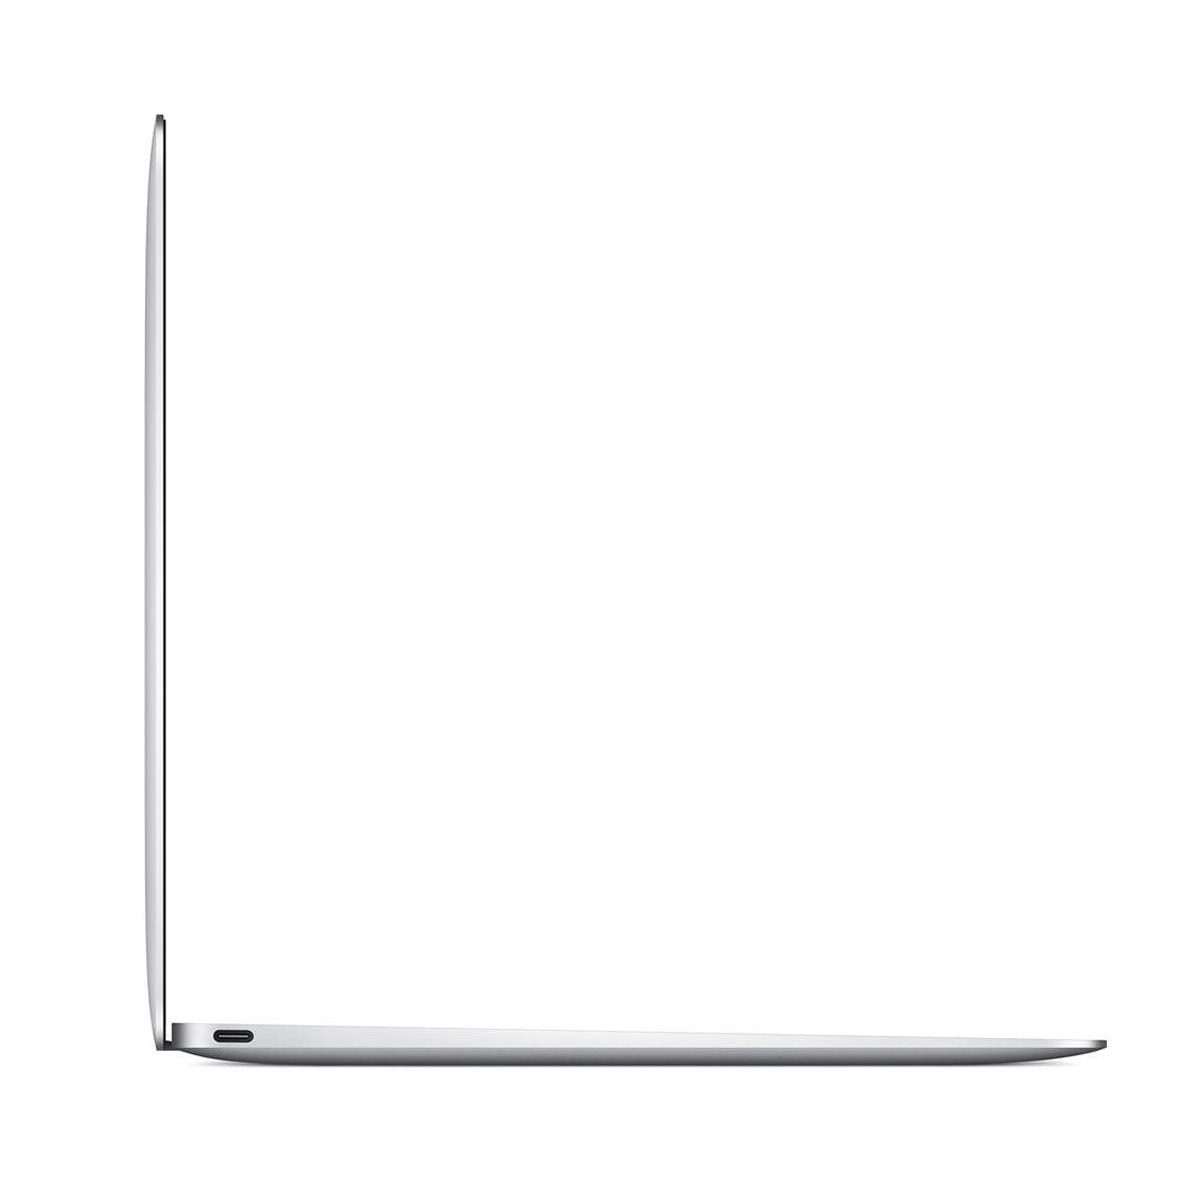 Ноутбук Apple MacBook 12 Retina Early 2015 Silver (MF855RU/A) (Core M 1100 Mhz/12.0/2304x1440/8.0Gb/256Gb SSD/DVD нет/Intel HD Graphics 5300/Wi-Fi/Bluetooth/MacOS X)